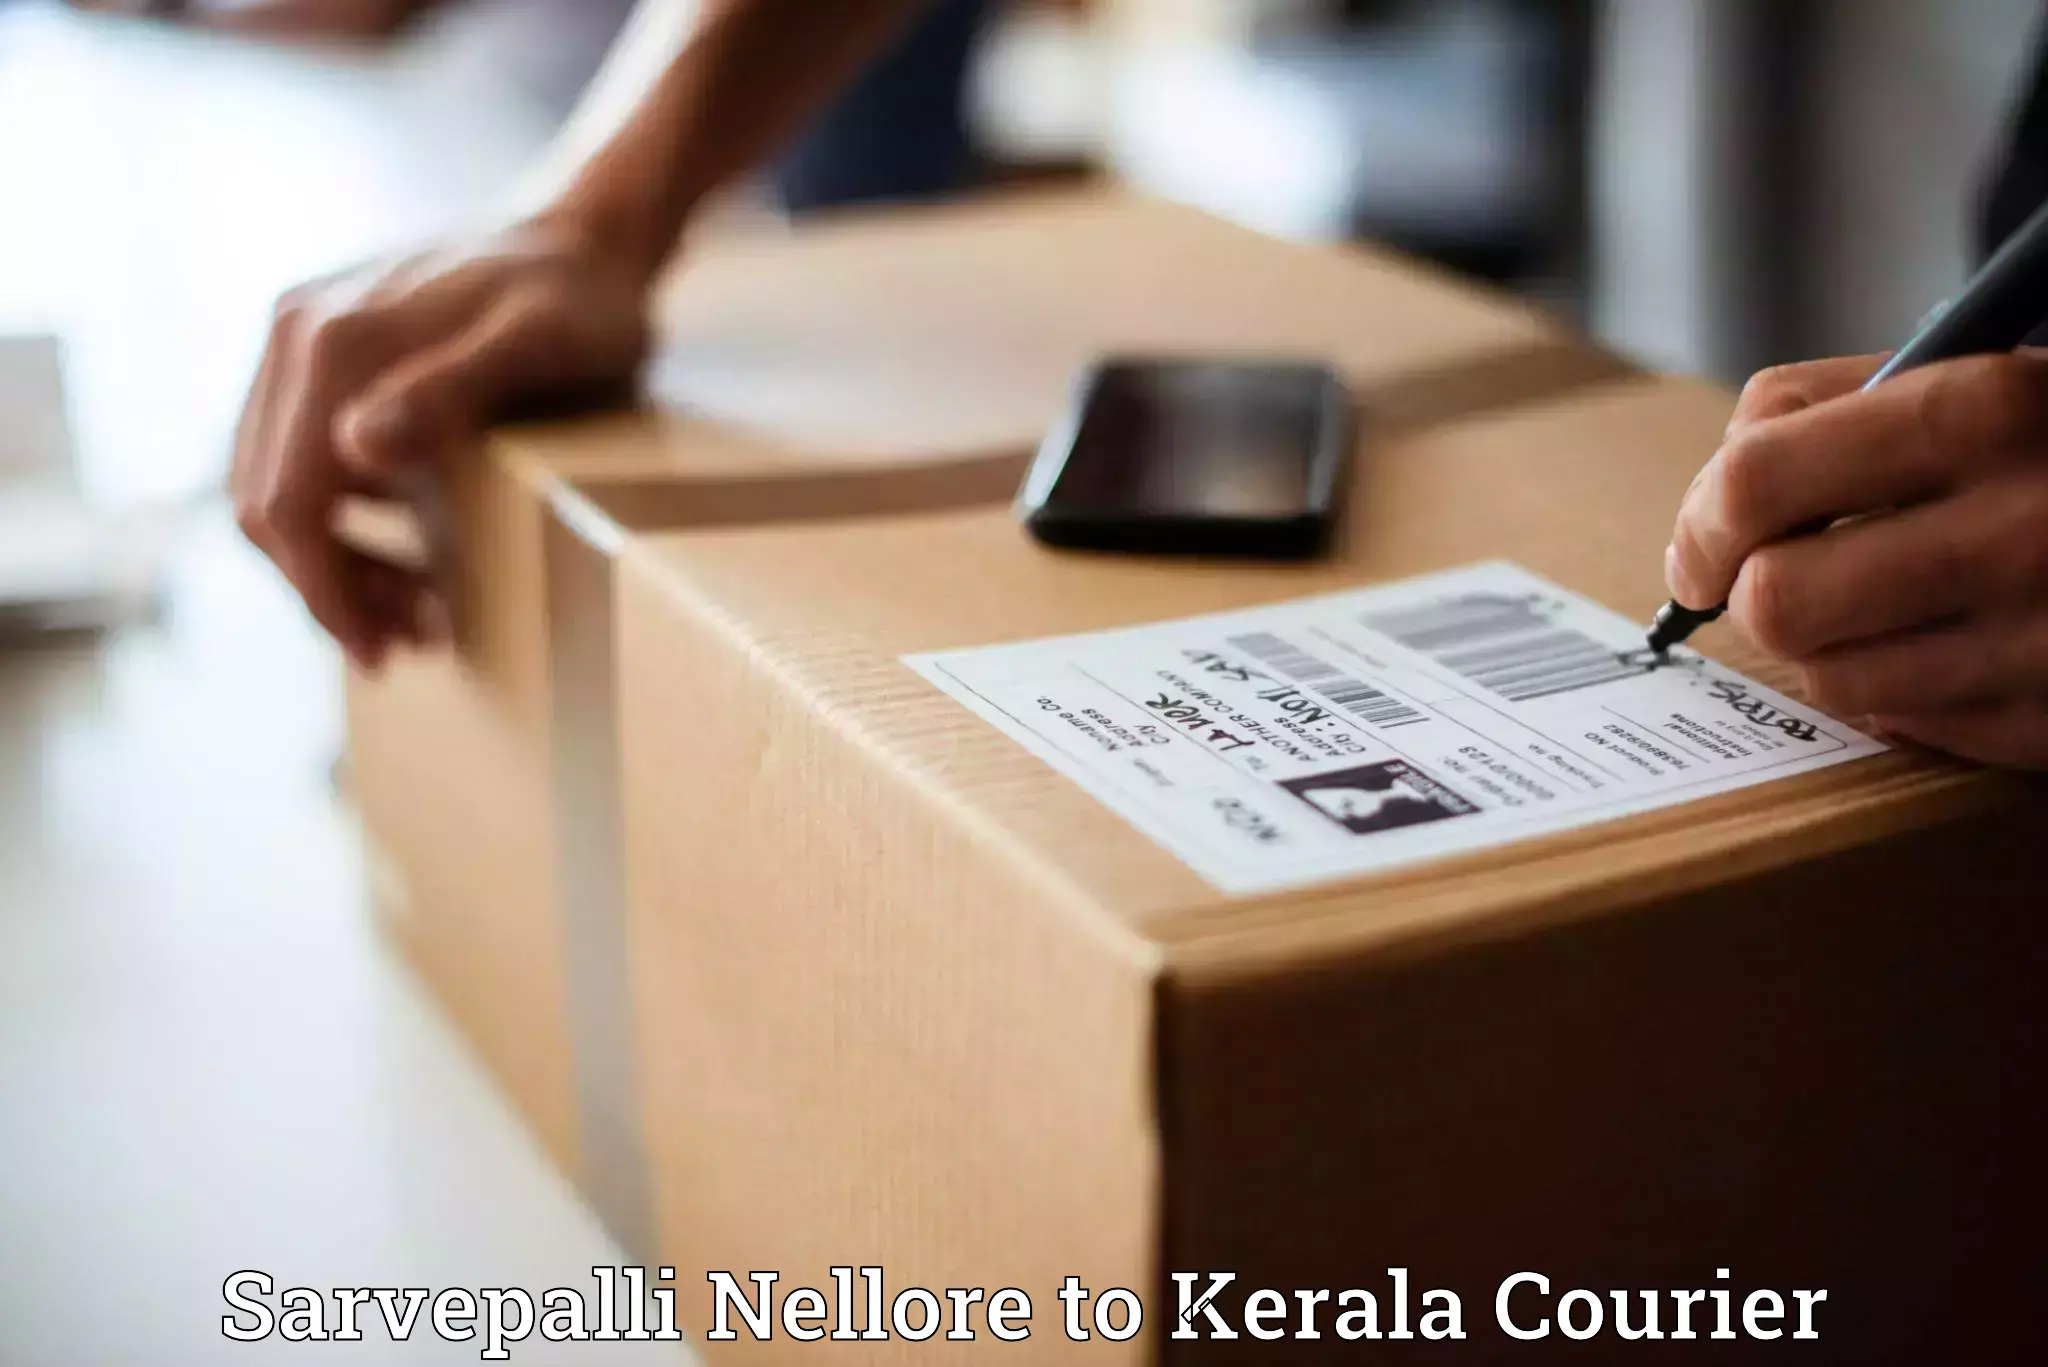 Automated parcel services Sarvepalli Nellore to Kollam